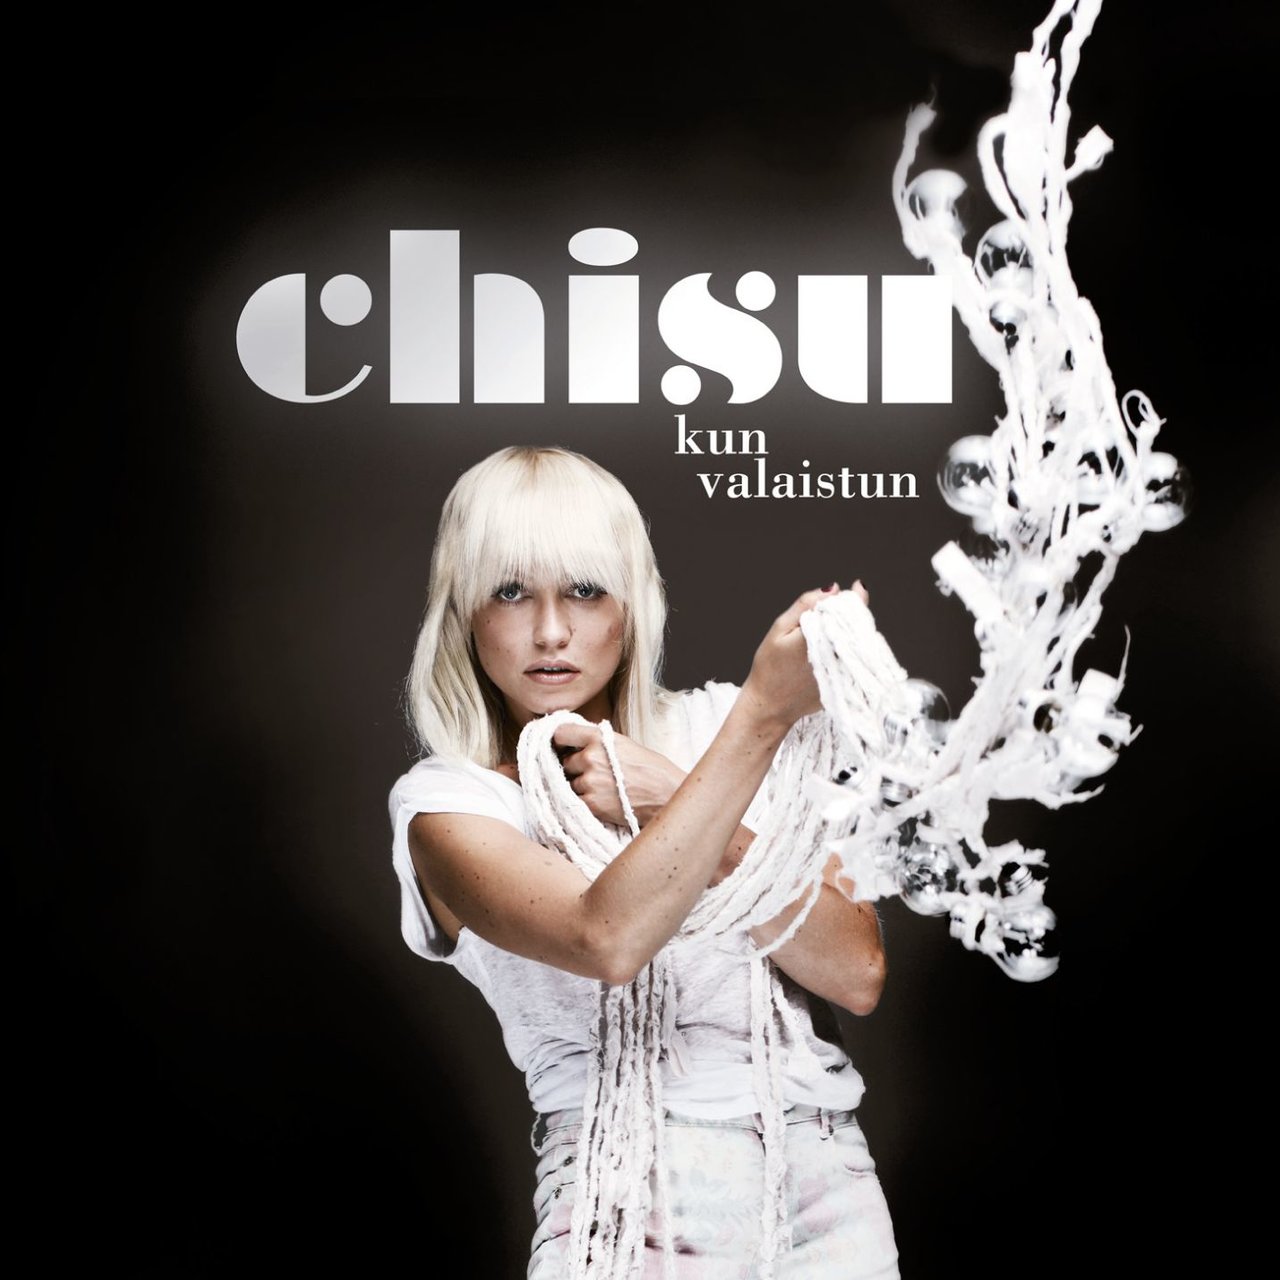 Chisu Kun valaistun cover artwork